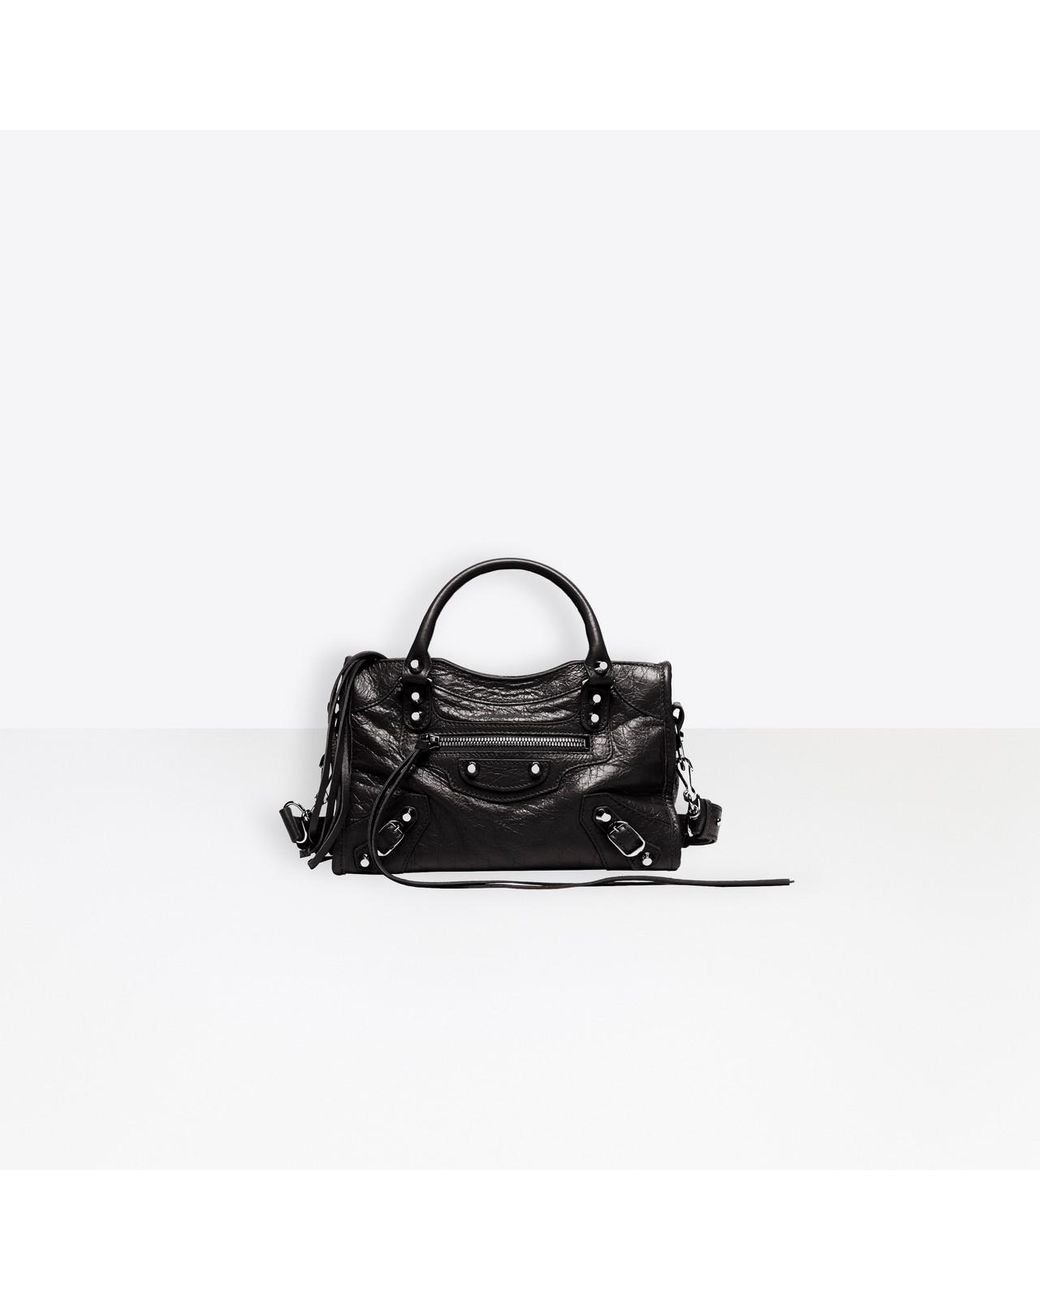 Balenciaga Mini City Leather Bag in Black | Lyst Australia